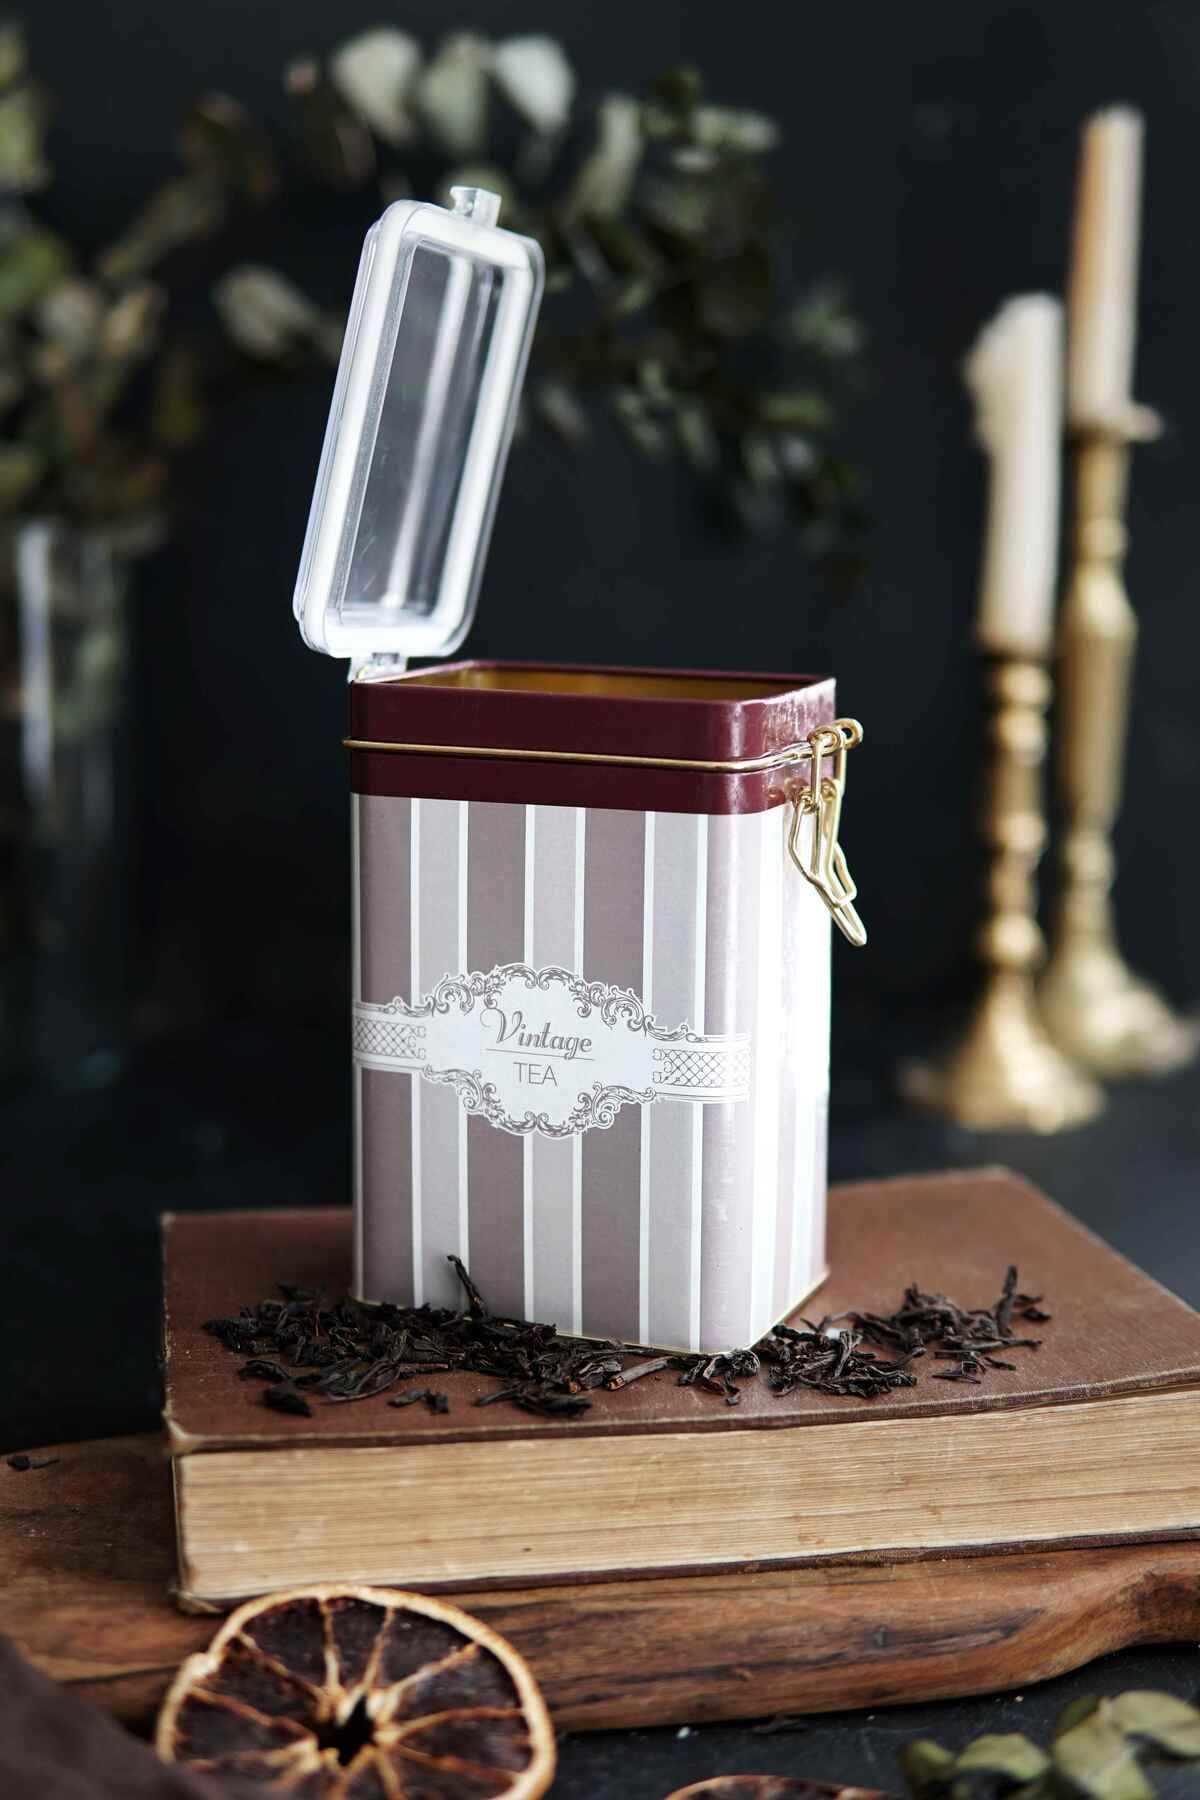 Evle Er043-6a Elegance Tea Desenli Dikdörtgen Metal Saklama Kabı 8x10 Cm